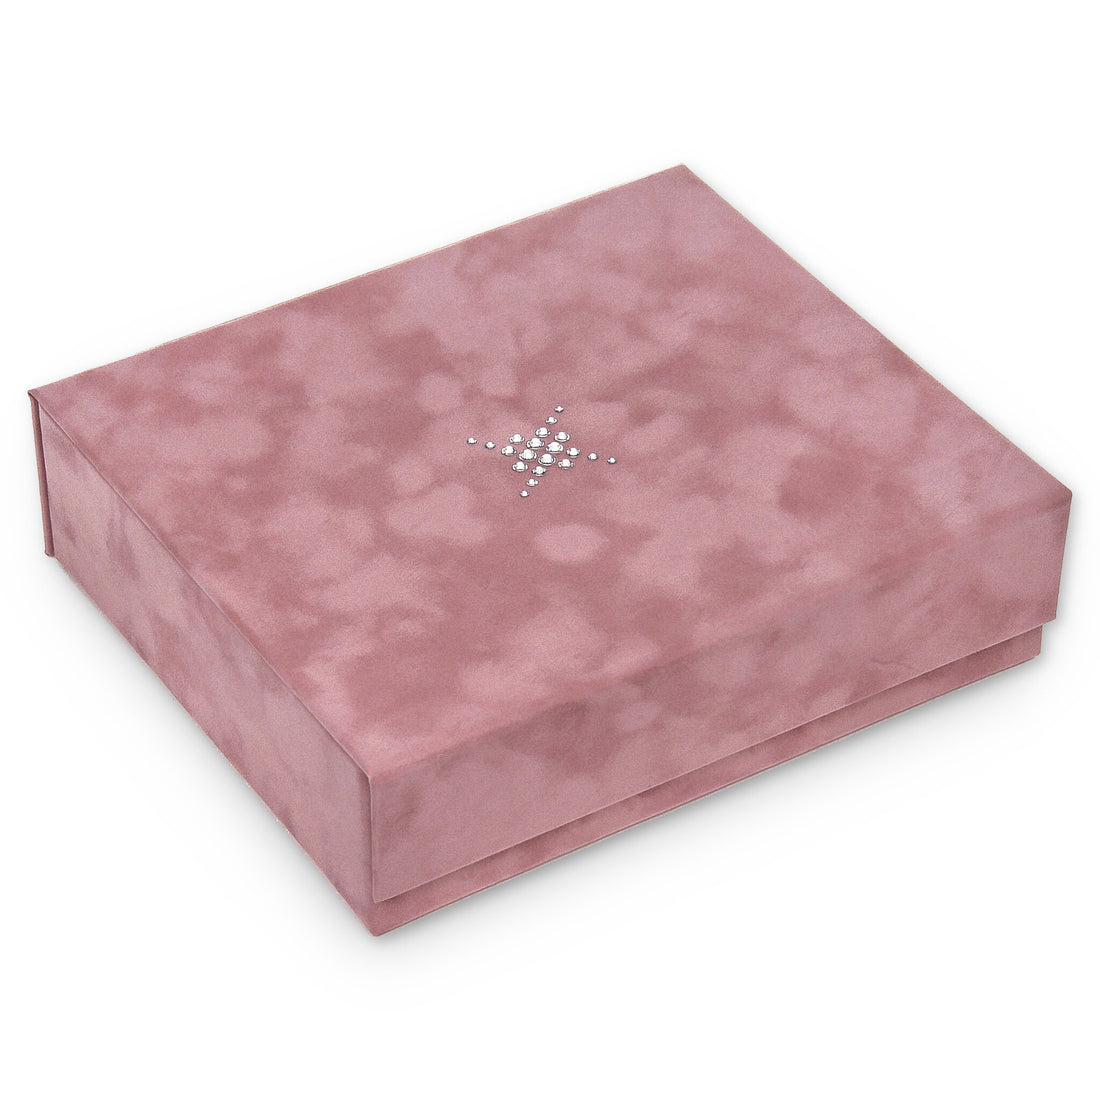 Schmuckbox 1846 rosé – Store alt | Offizieller SACHER crystalo / Manufaktur Nora